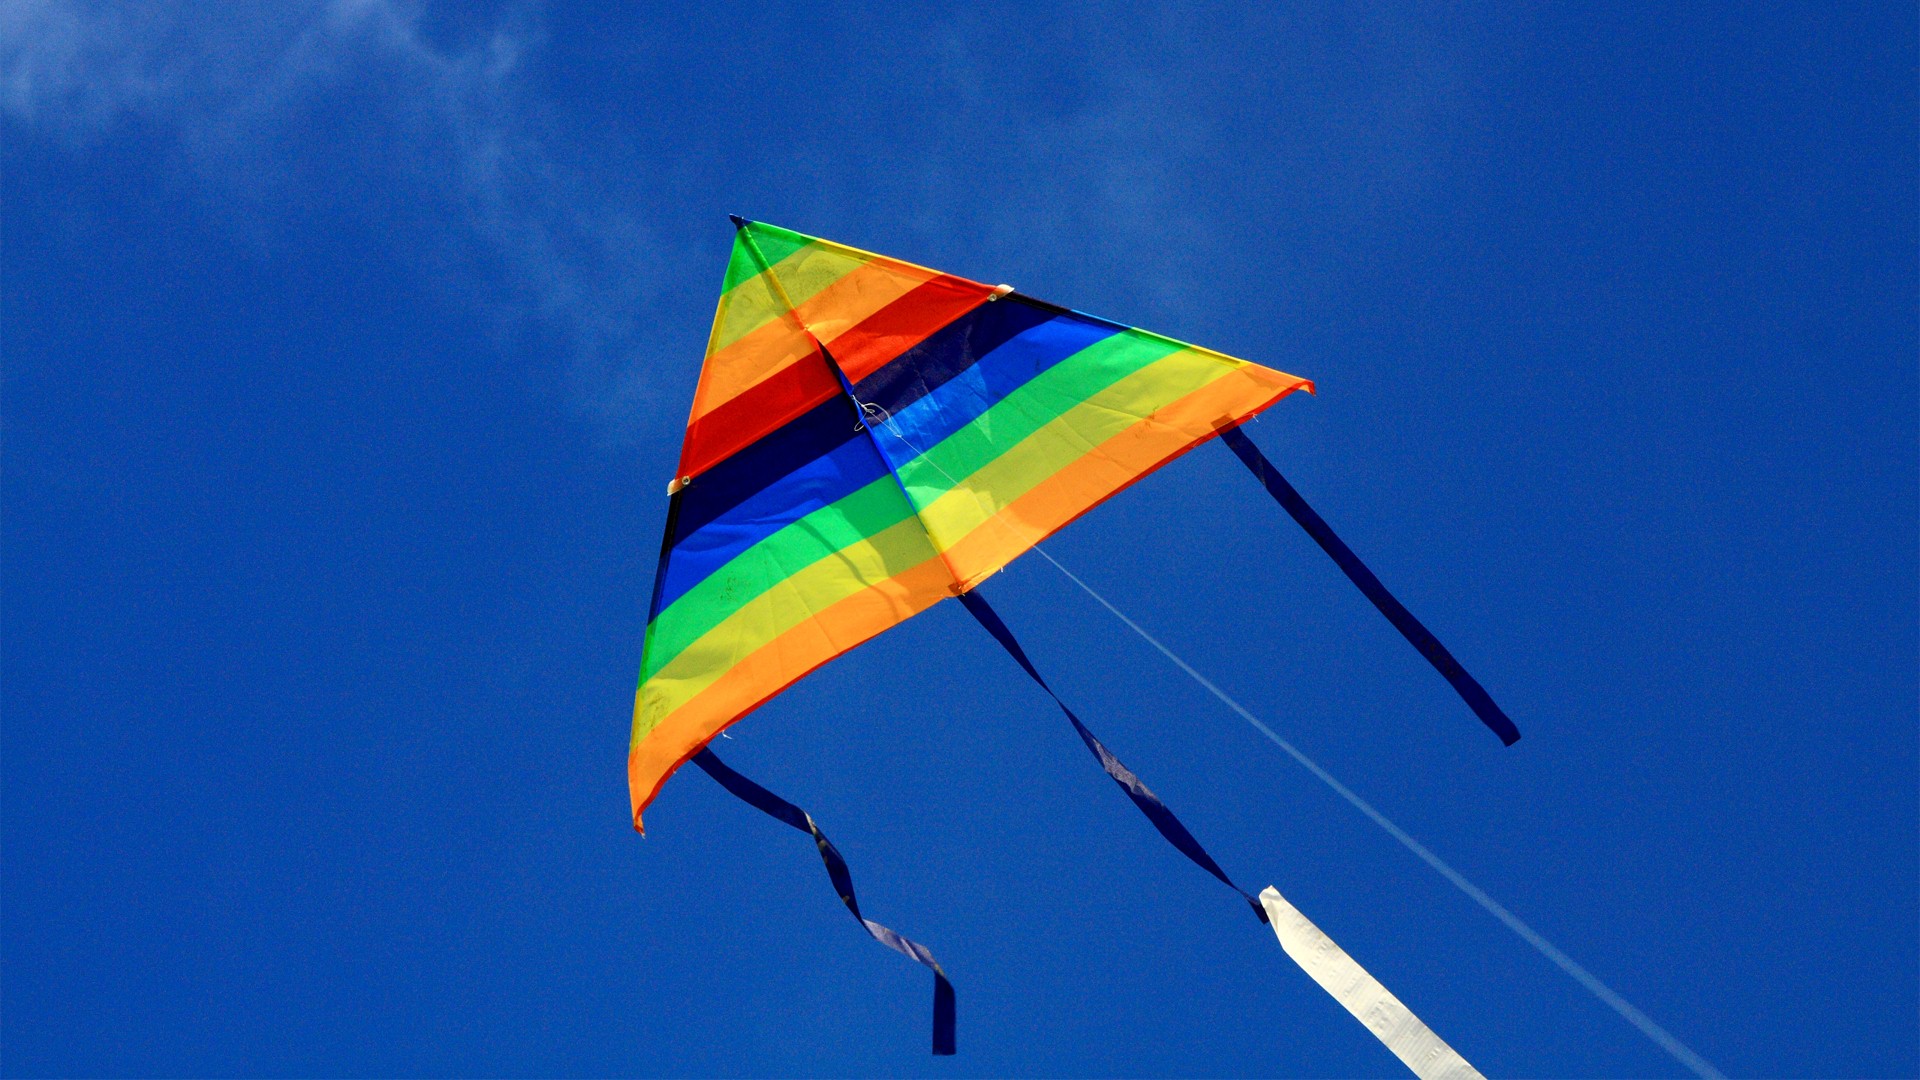 kite wallpaper,sky,sport kite,kite,kite sports,wind